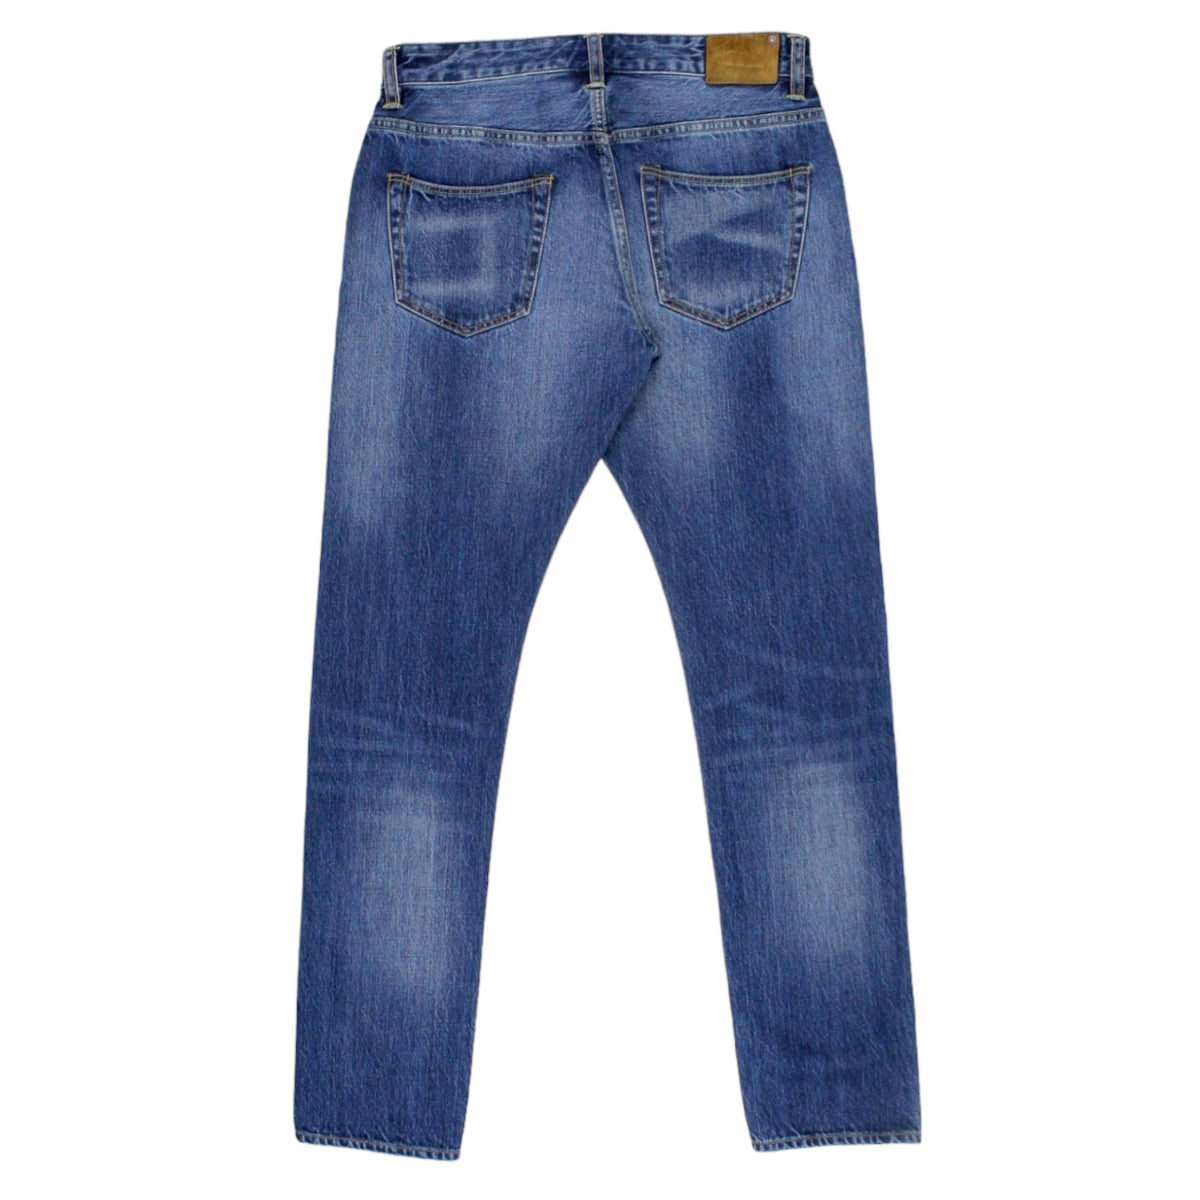 Indigo Farm For Garbstore Blue Jeans